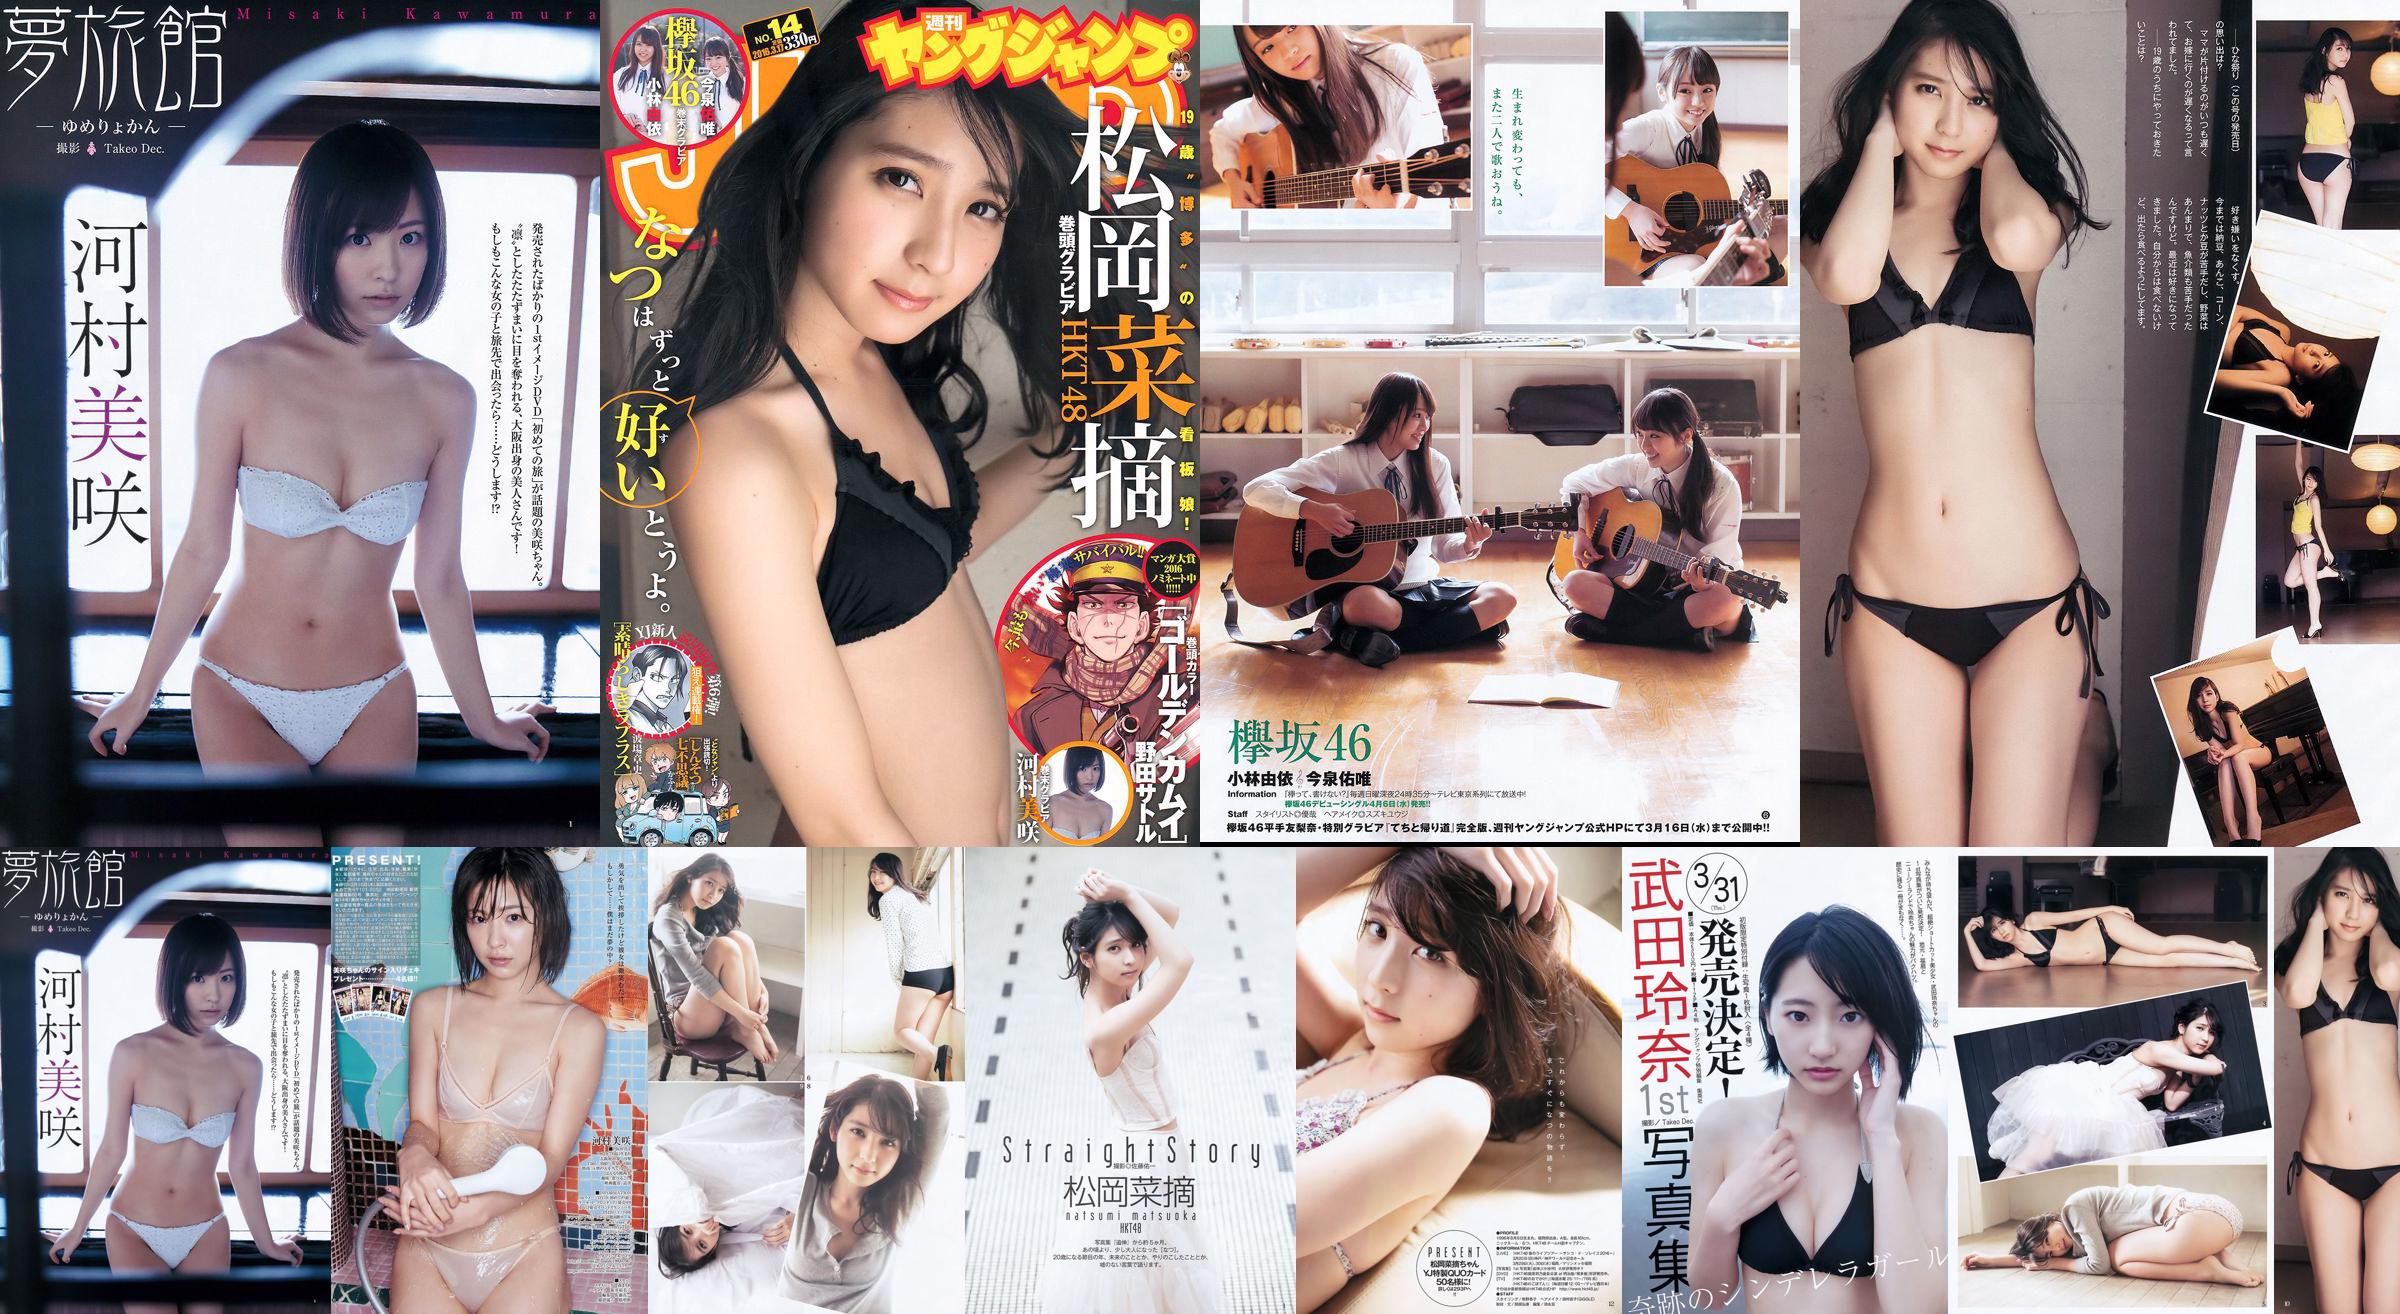 Pilihan Sayur Muraoka Yui Kobayashi Yui Imaizumi Misaki Kawamura [Lompat Muda Mingguan] Majalah Foto No. 14 2016 No.f801b0 Halaman 3